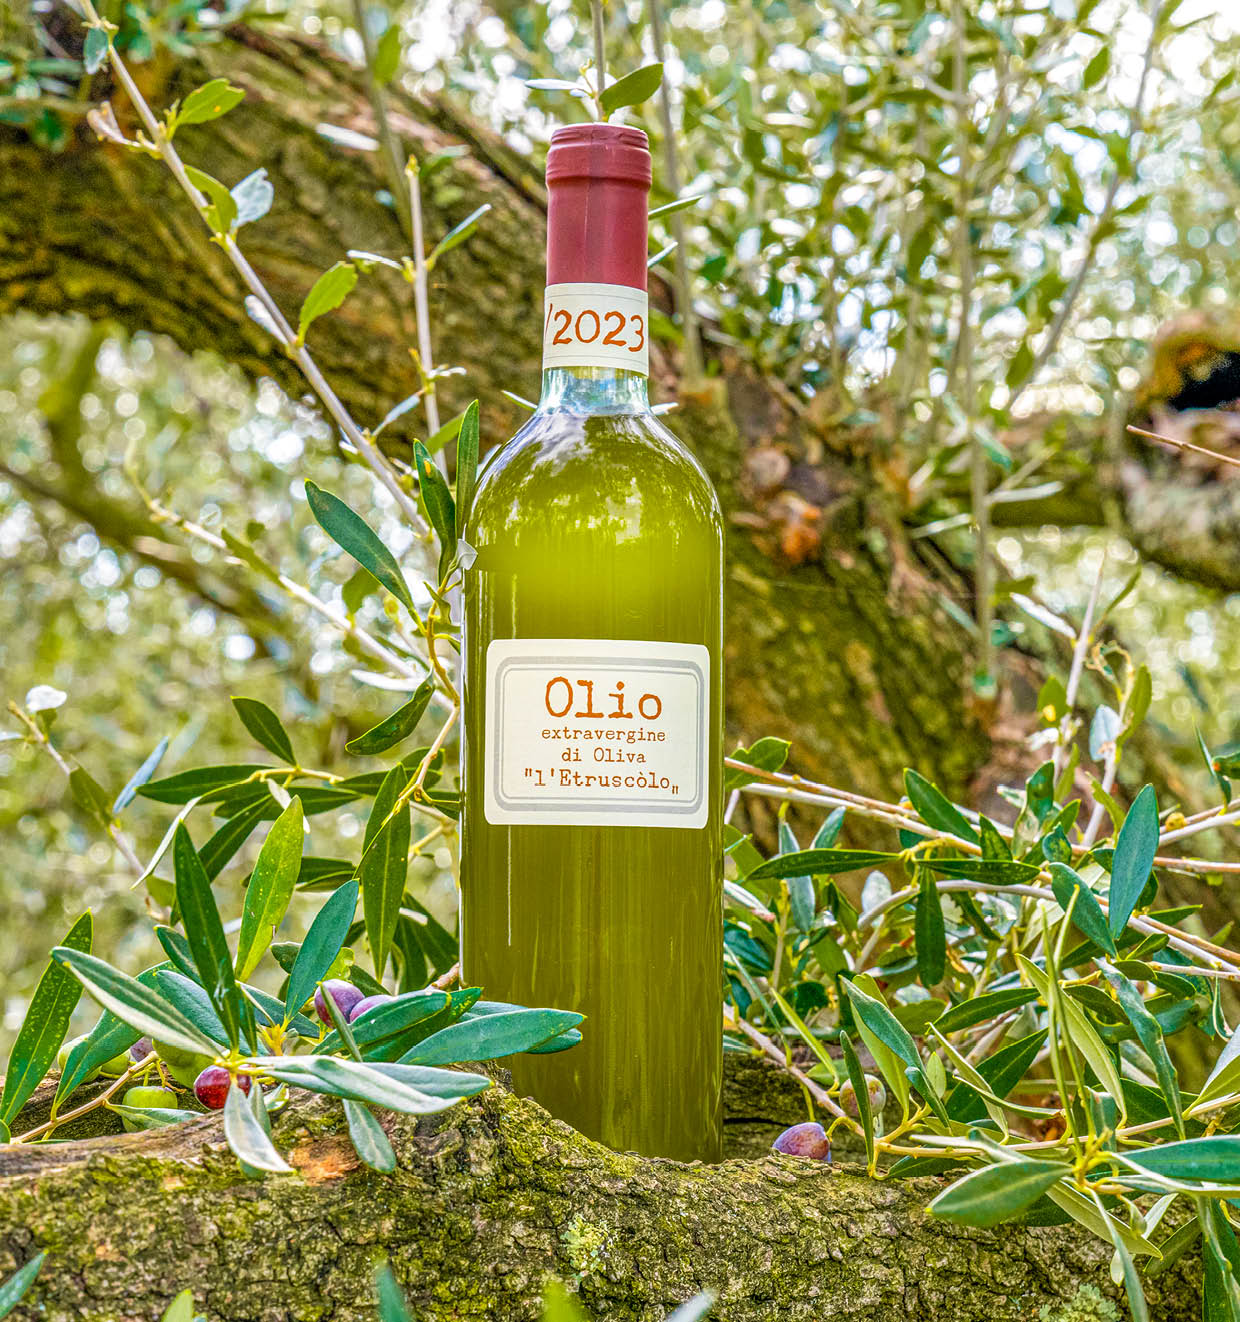 Extra Virgin Olive Oil 2023<br>'l' Etruscòlo'